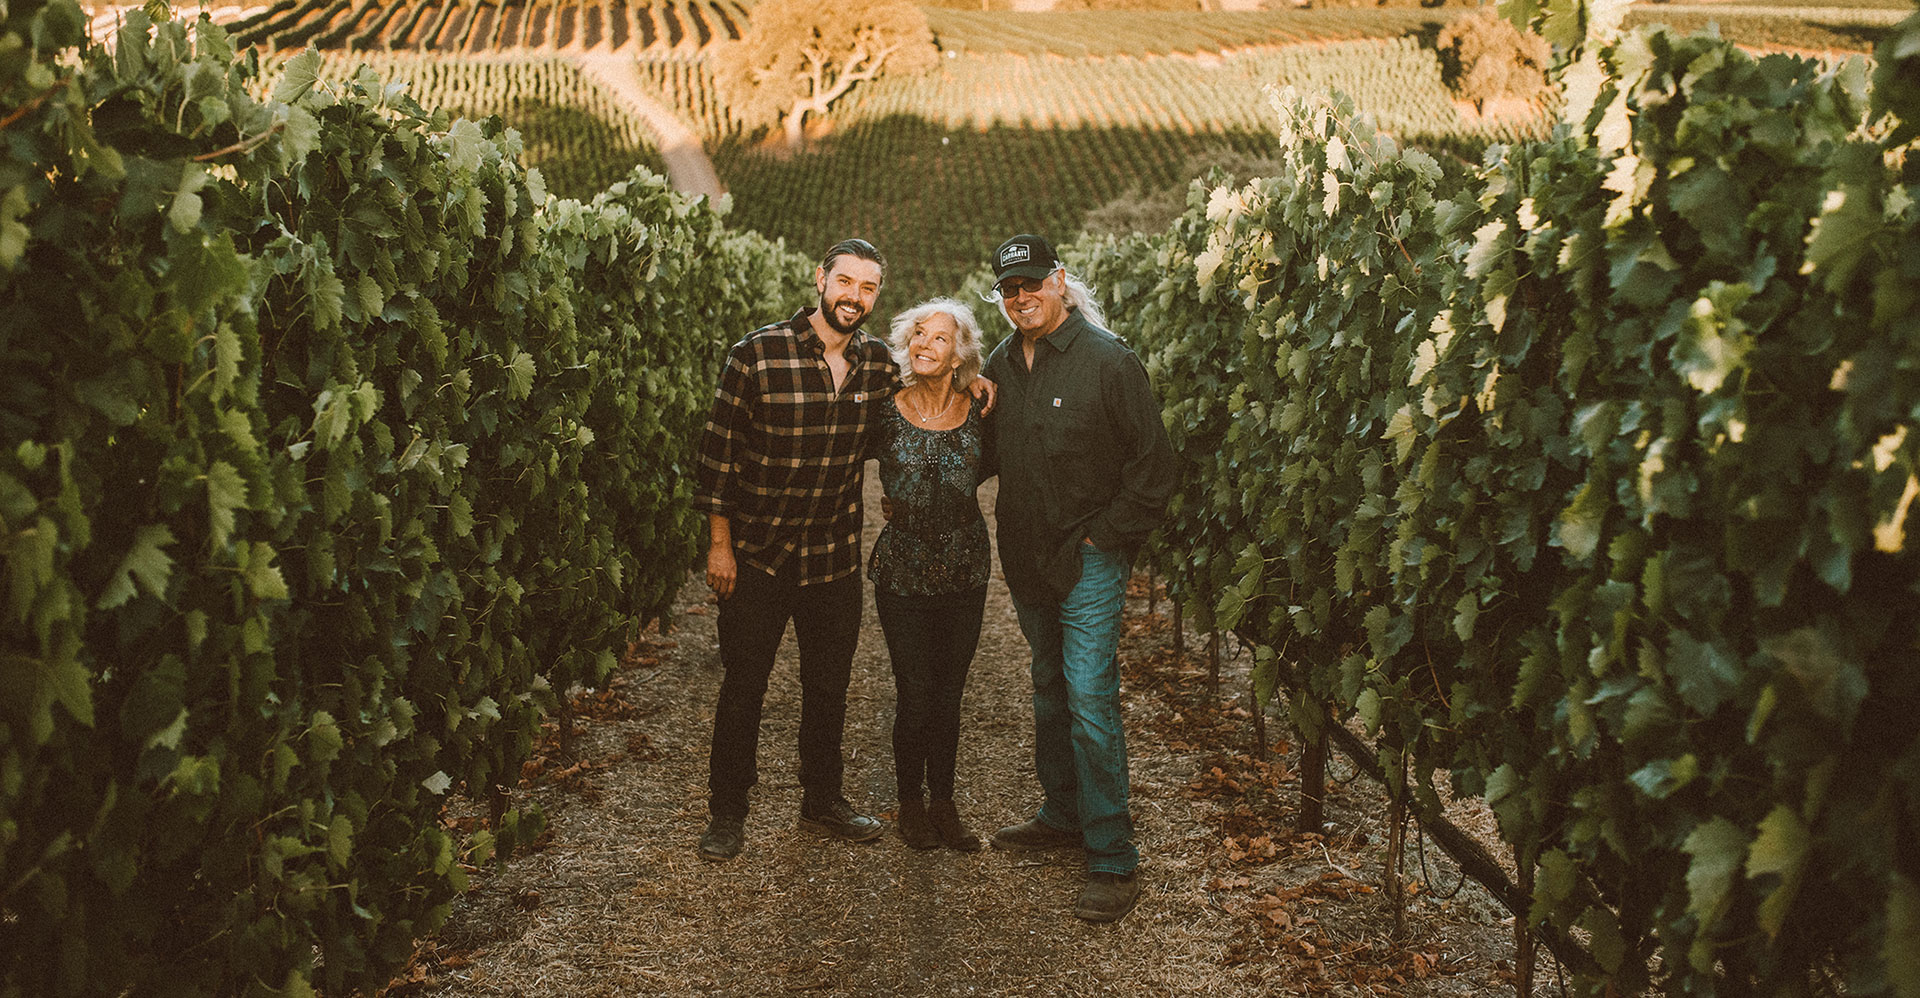 Carhartt Family in the Vineyard